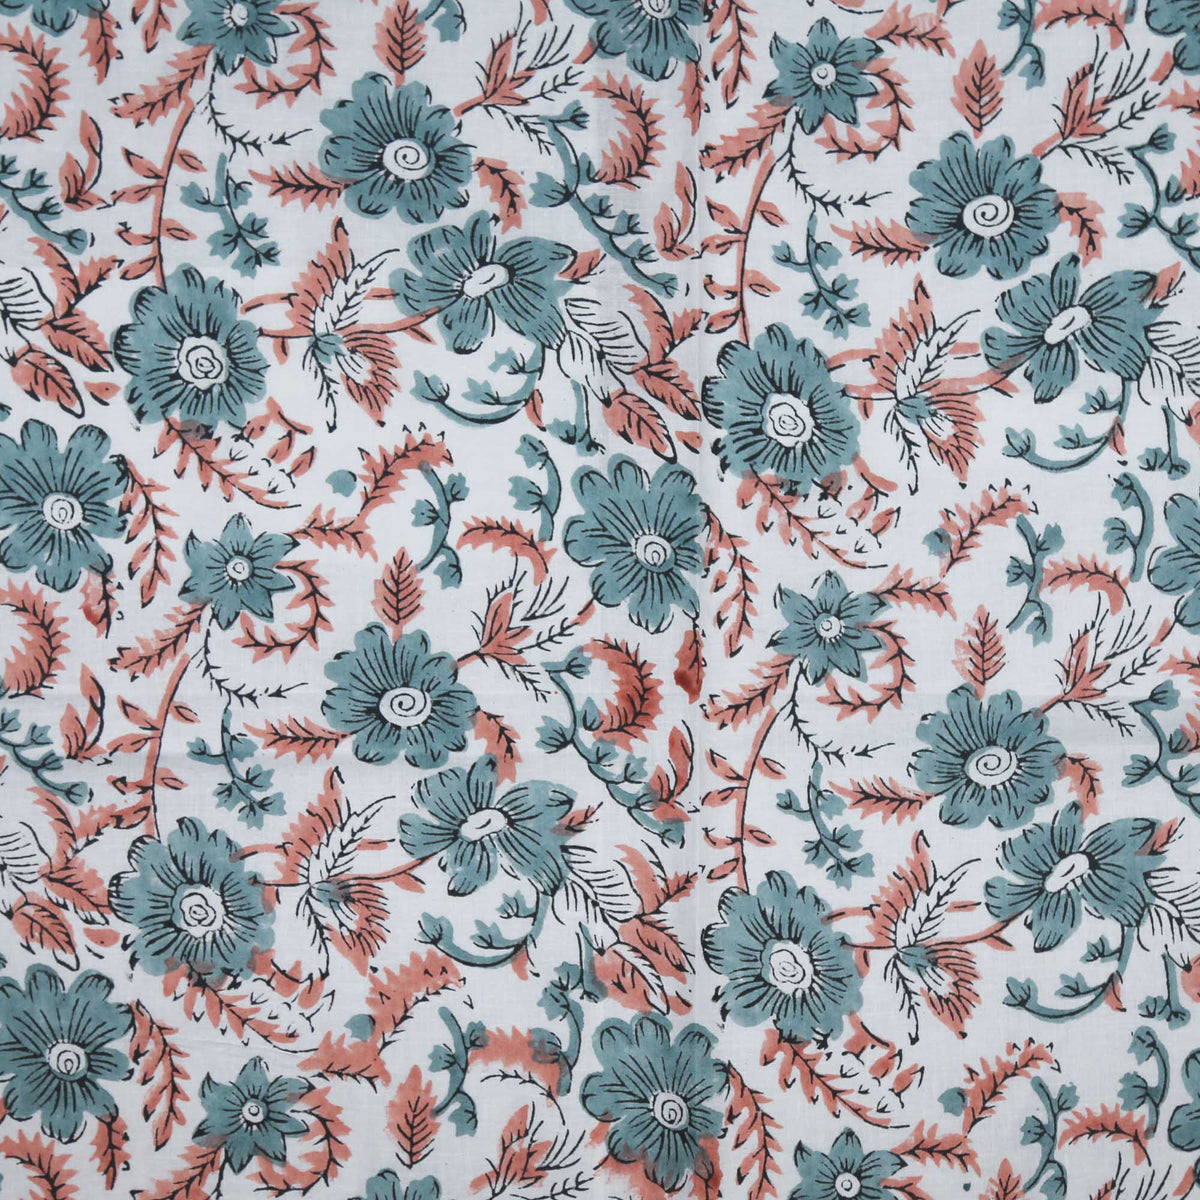 Block Printed 100% Cotton Fabric - Sweet Teal Rose Garden ( Design 450)